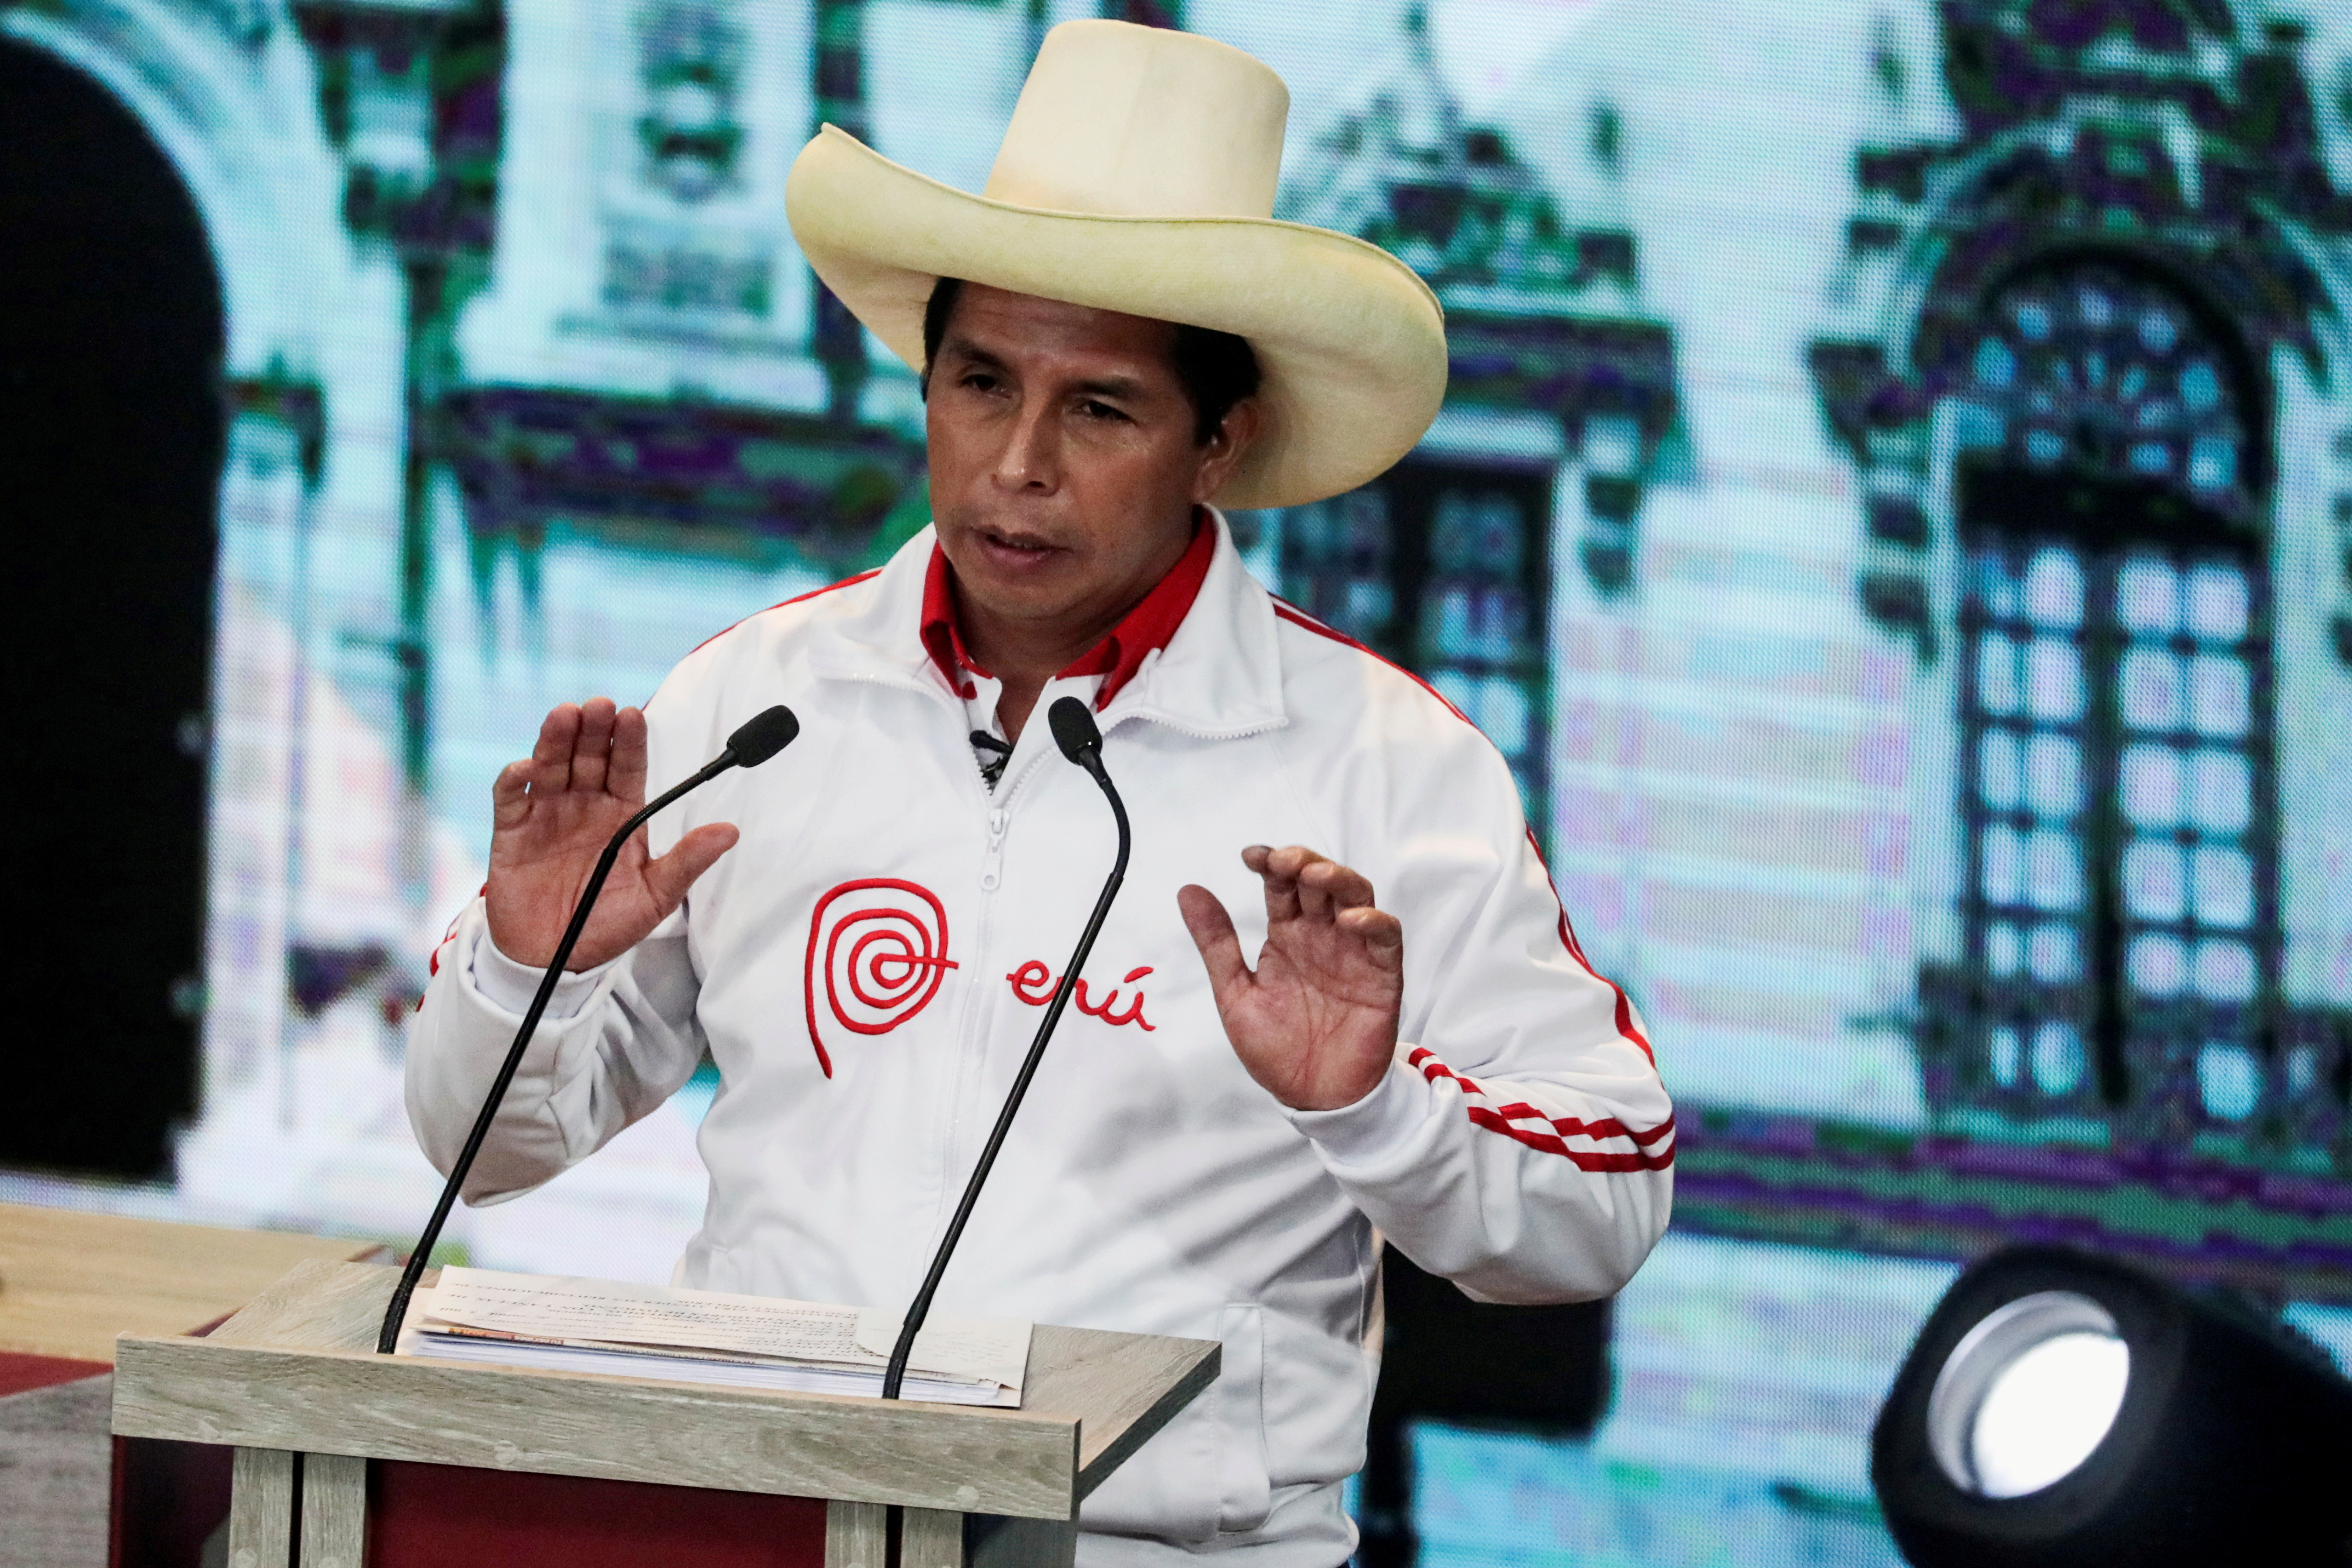 Peru's socialist candidate Pedro Castillo gestures during a debate in Arequipa